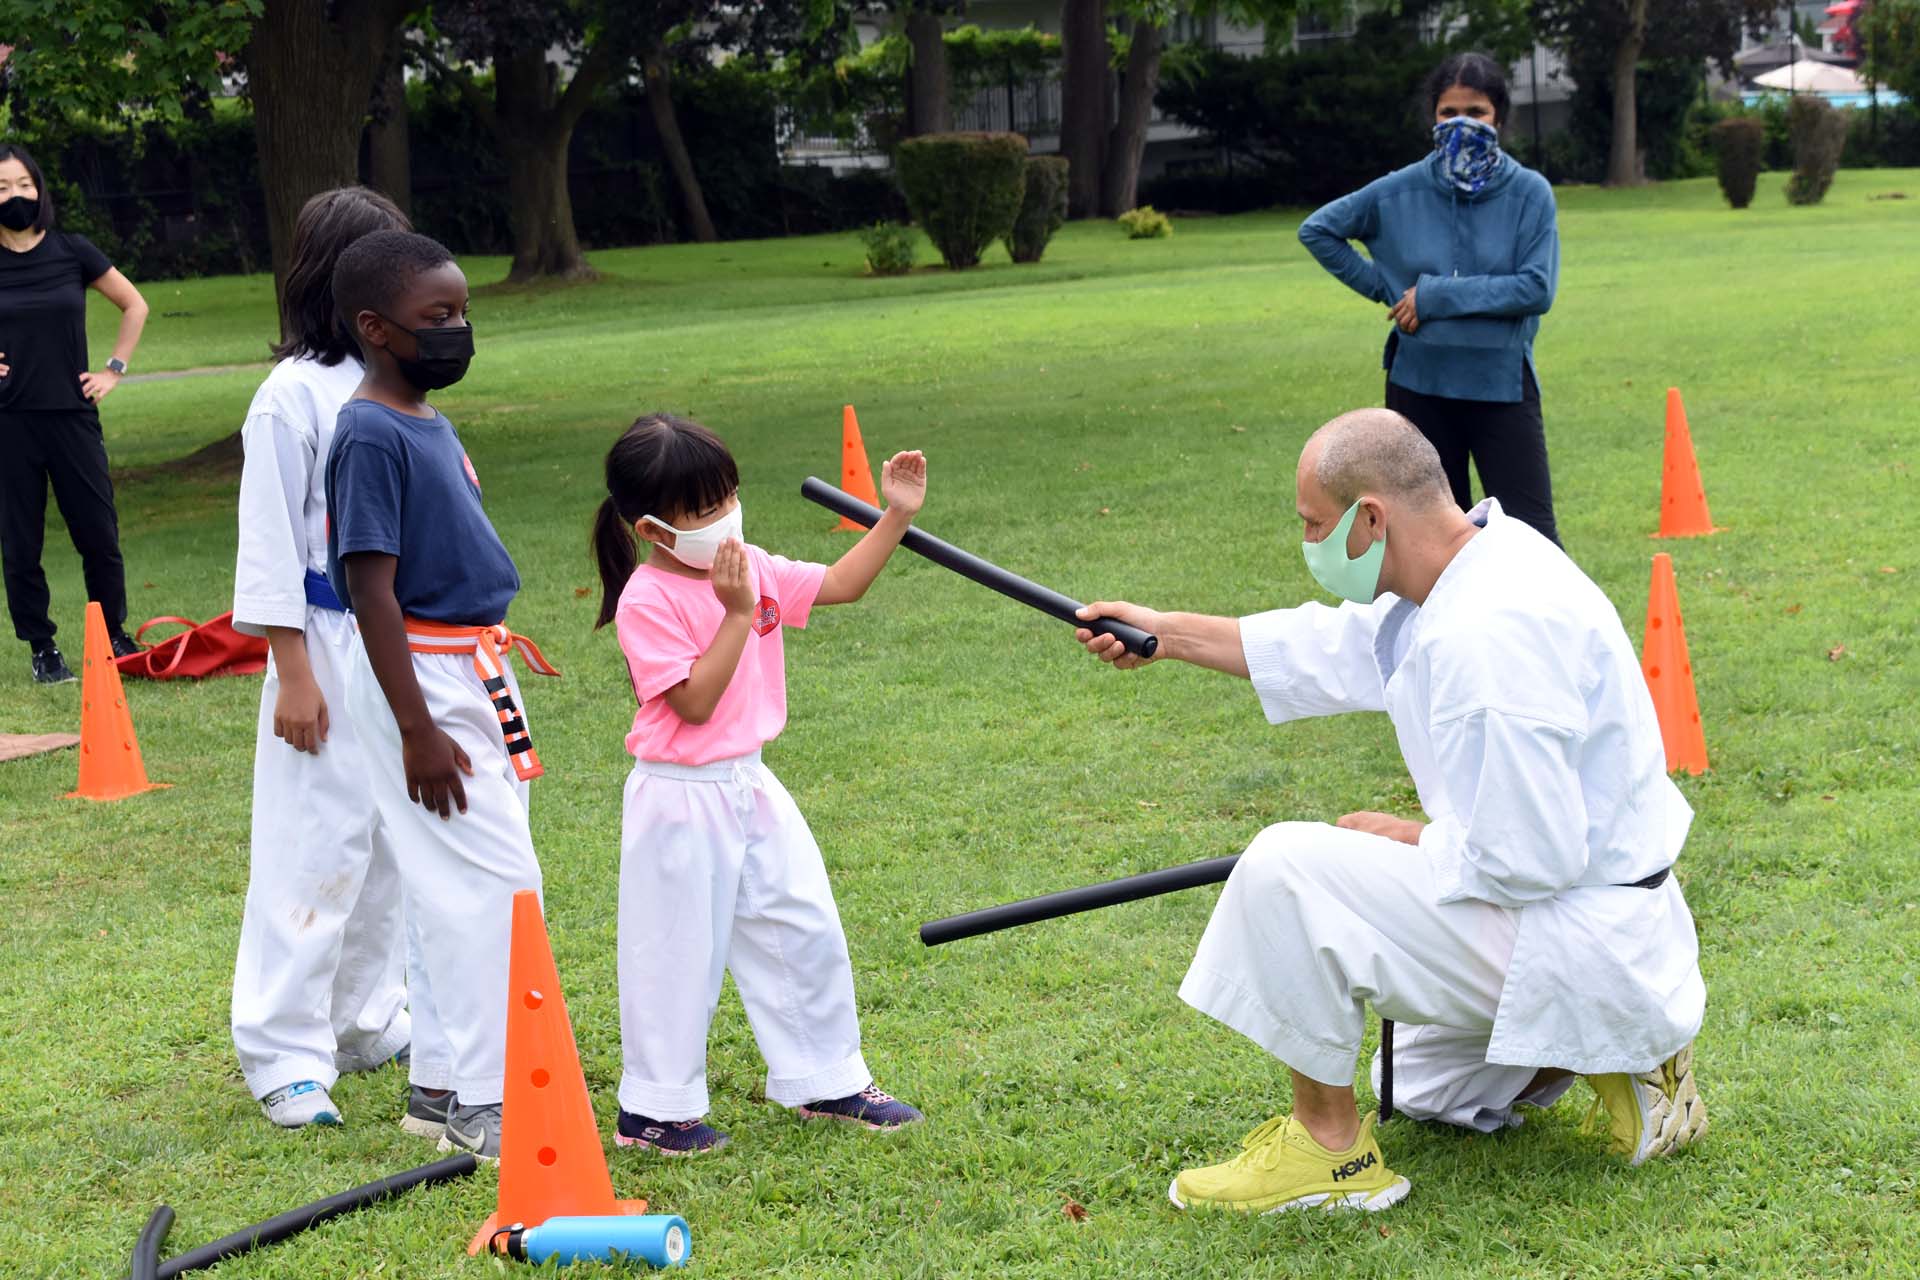 2021 August 1st - Shotokan Karate & Krav Maga Self-Defense Classes Outdoors at Davenport Park